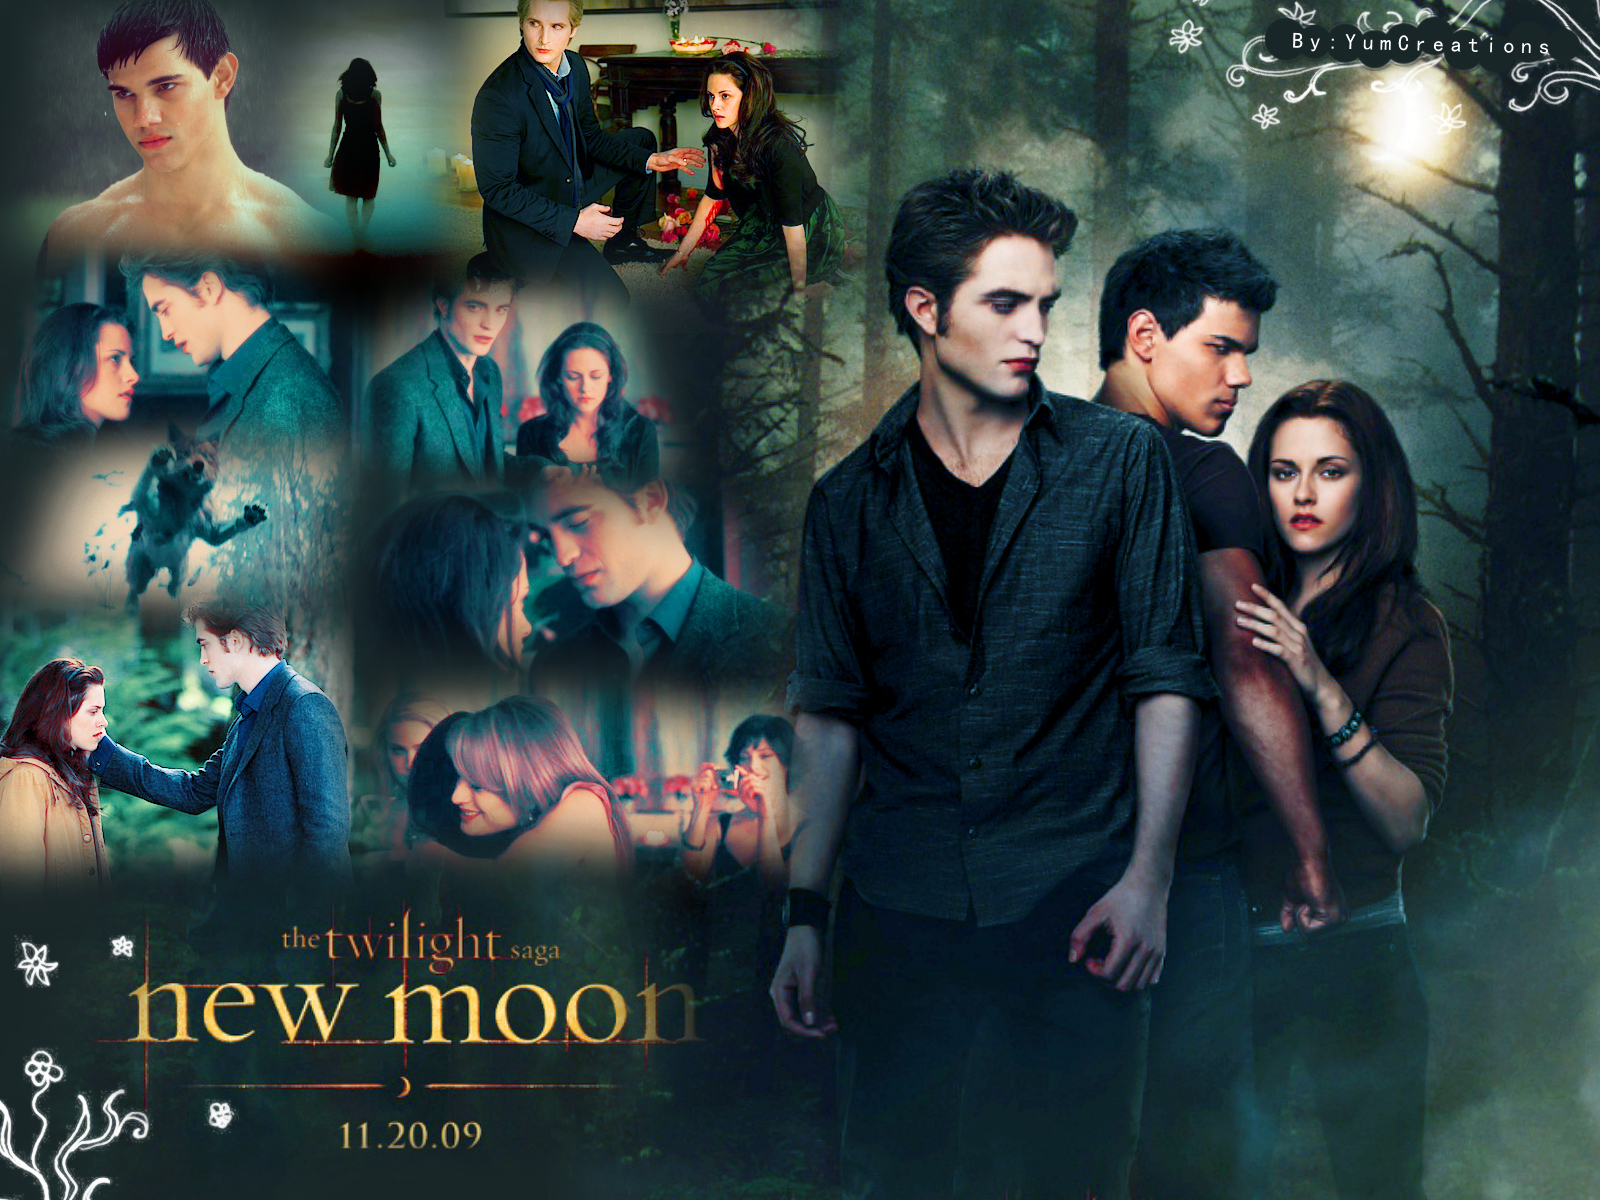 New Moon Wallpaper - New Moon Movie Wallpaper (29944210) - Fanpop